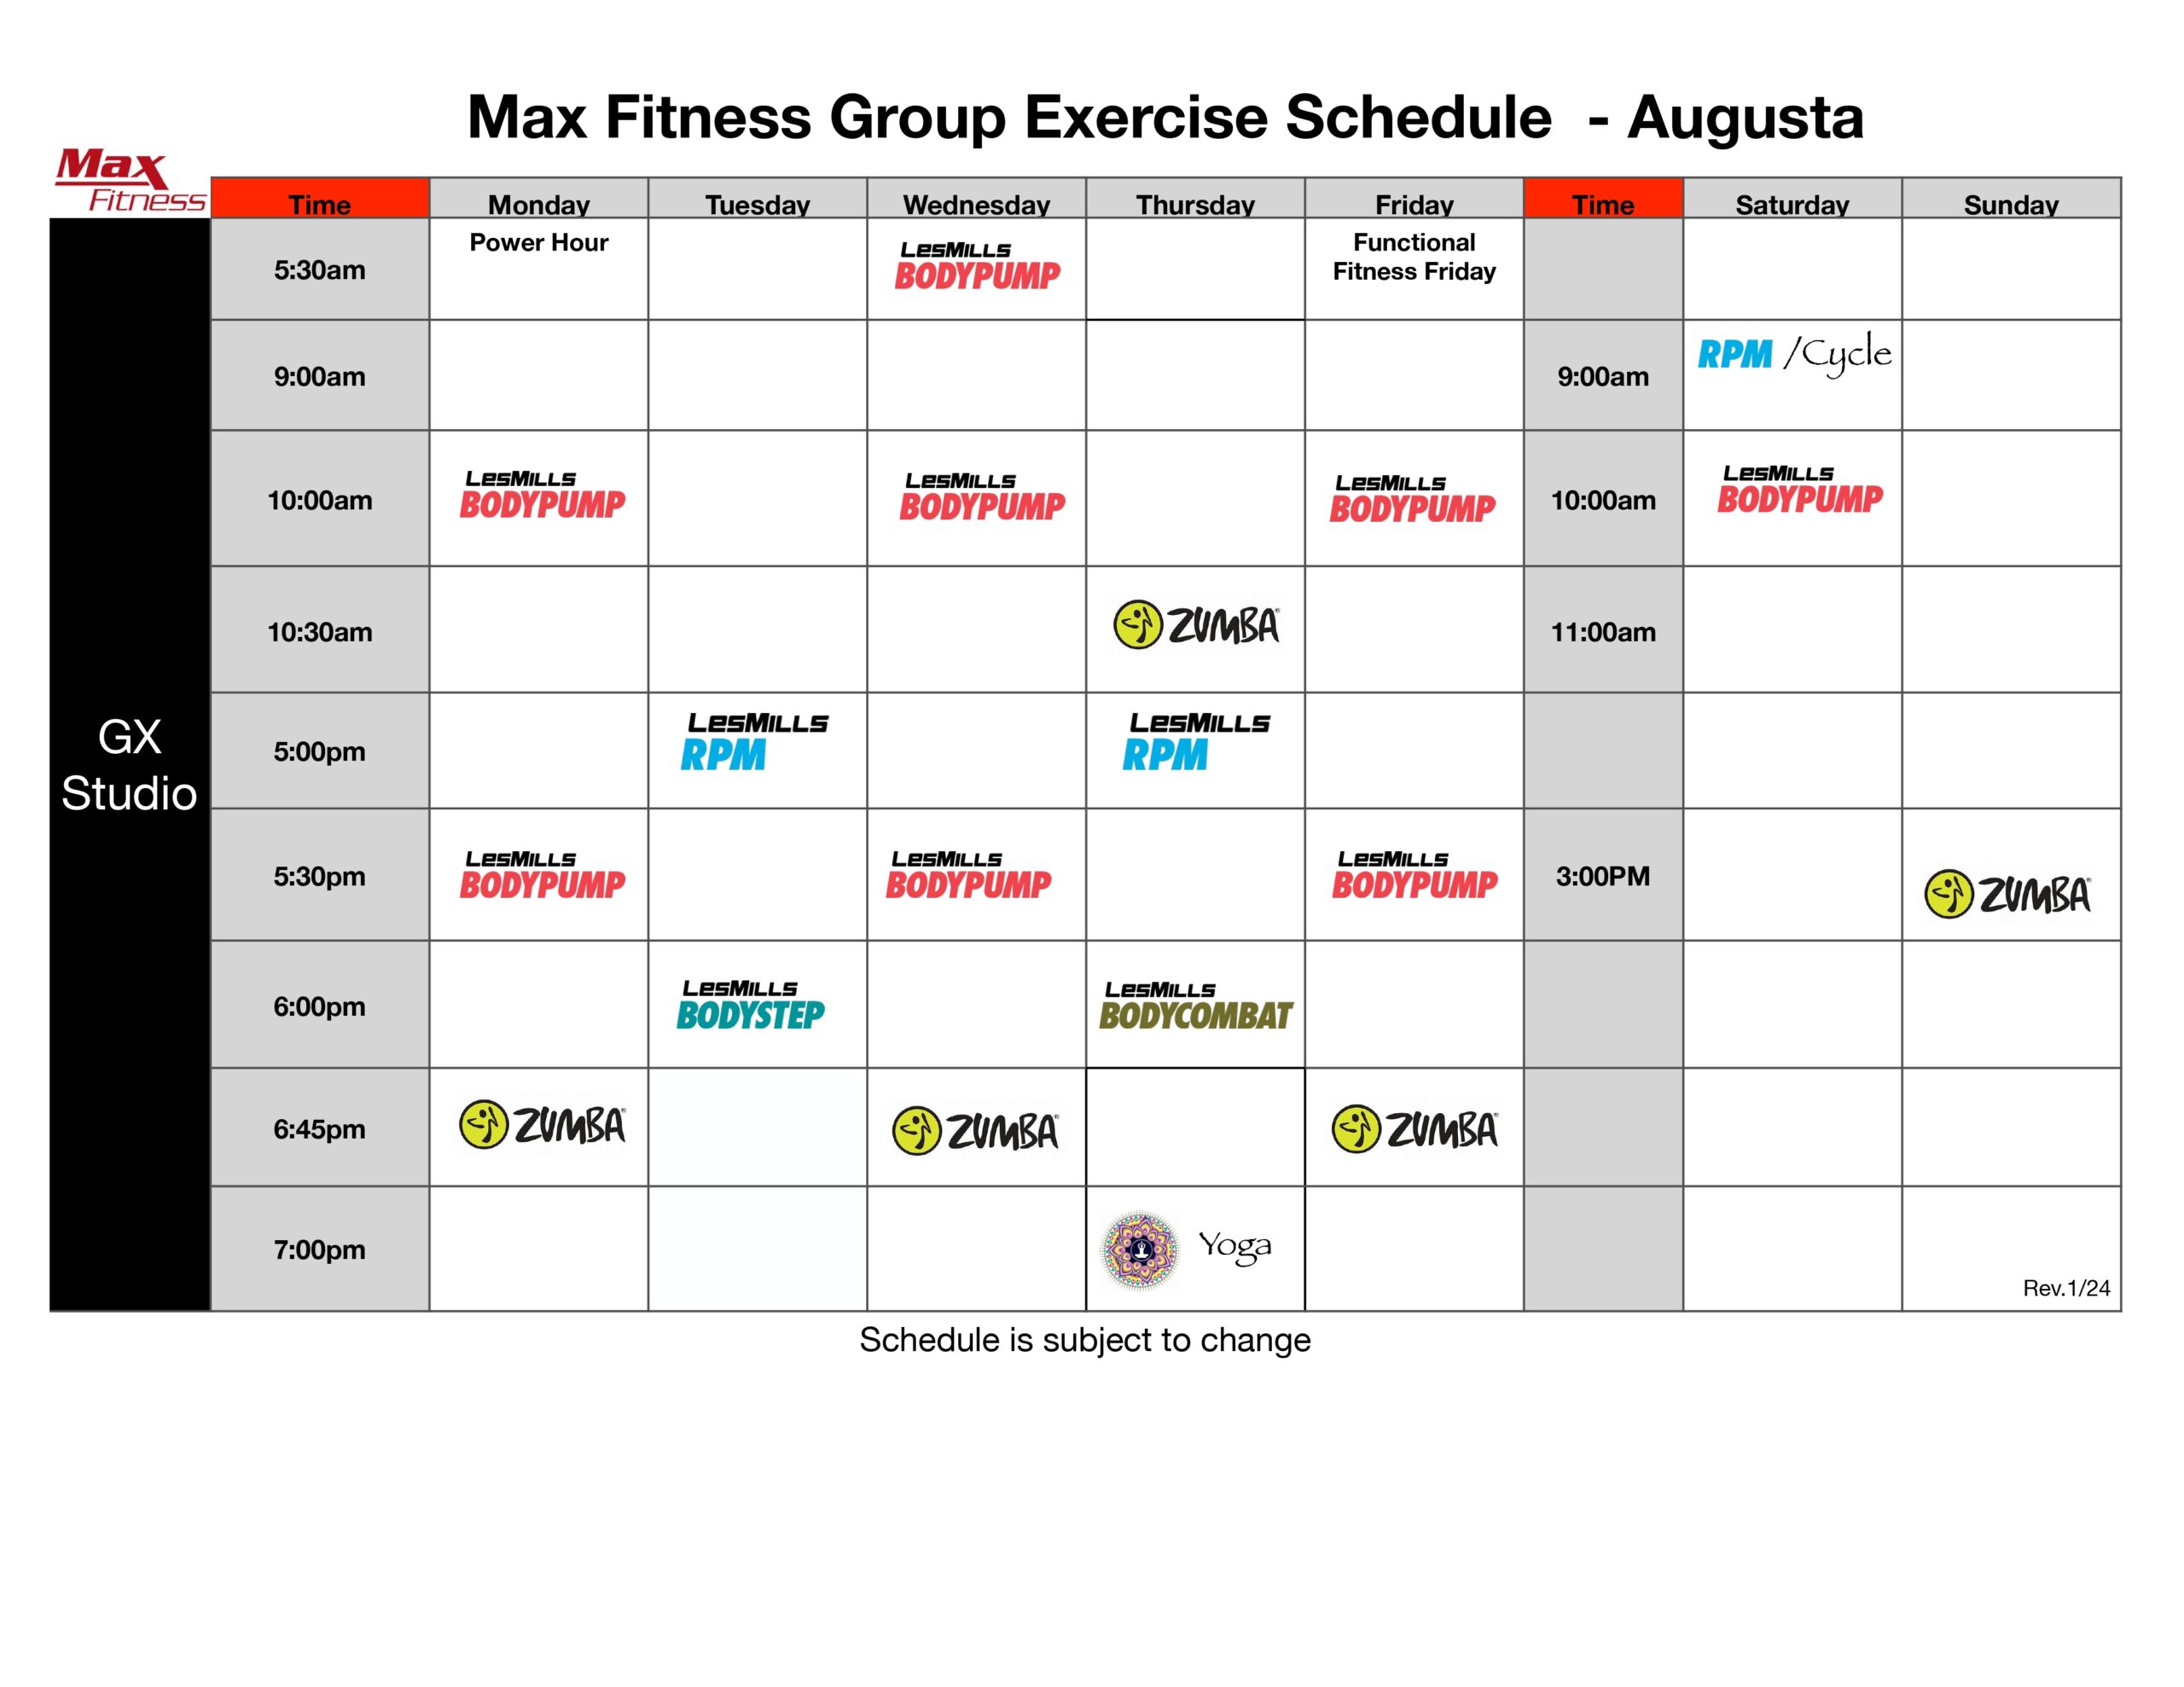 Maxfitness gx schedule augusta 2023 rev 1 24 scaled - max fitness- augusta